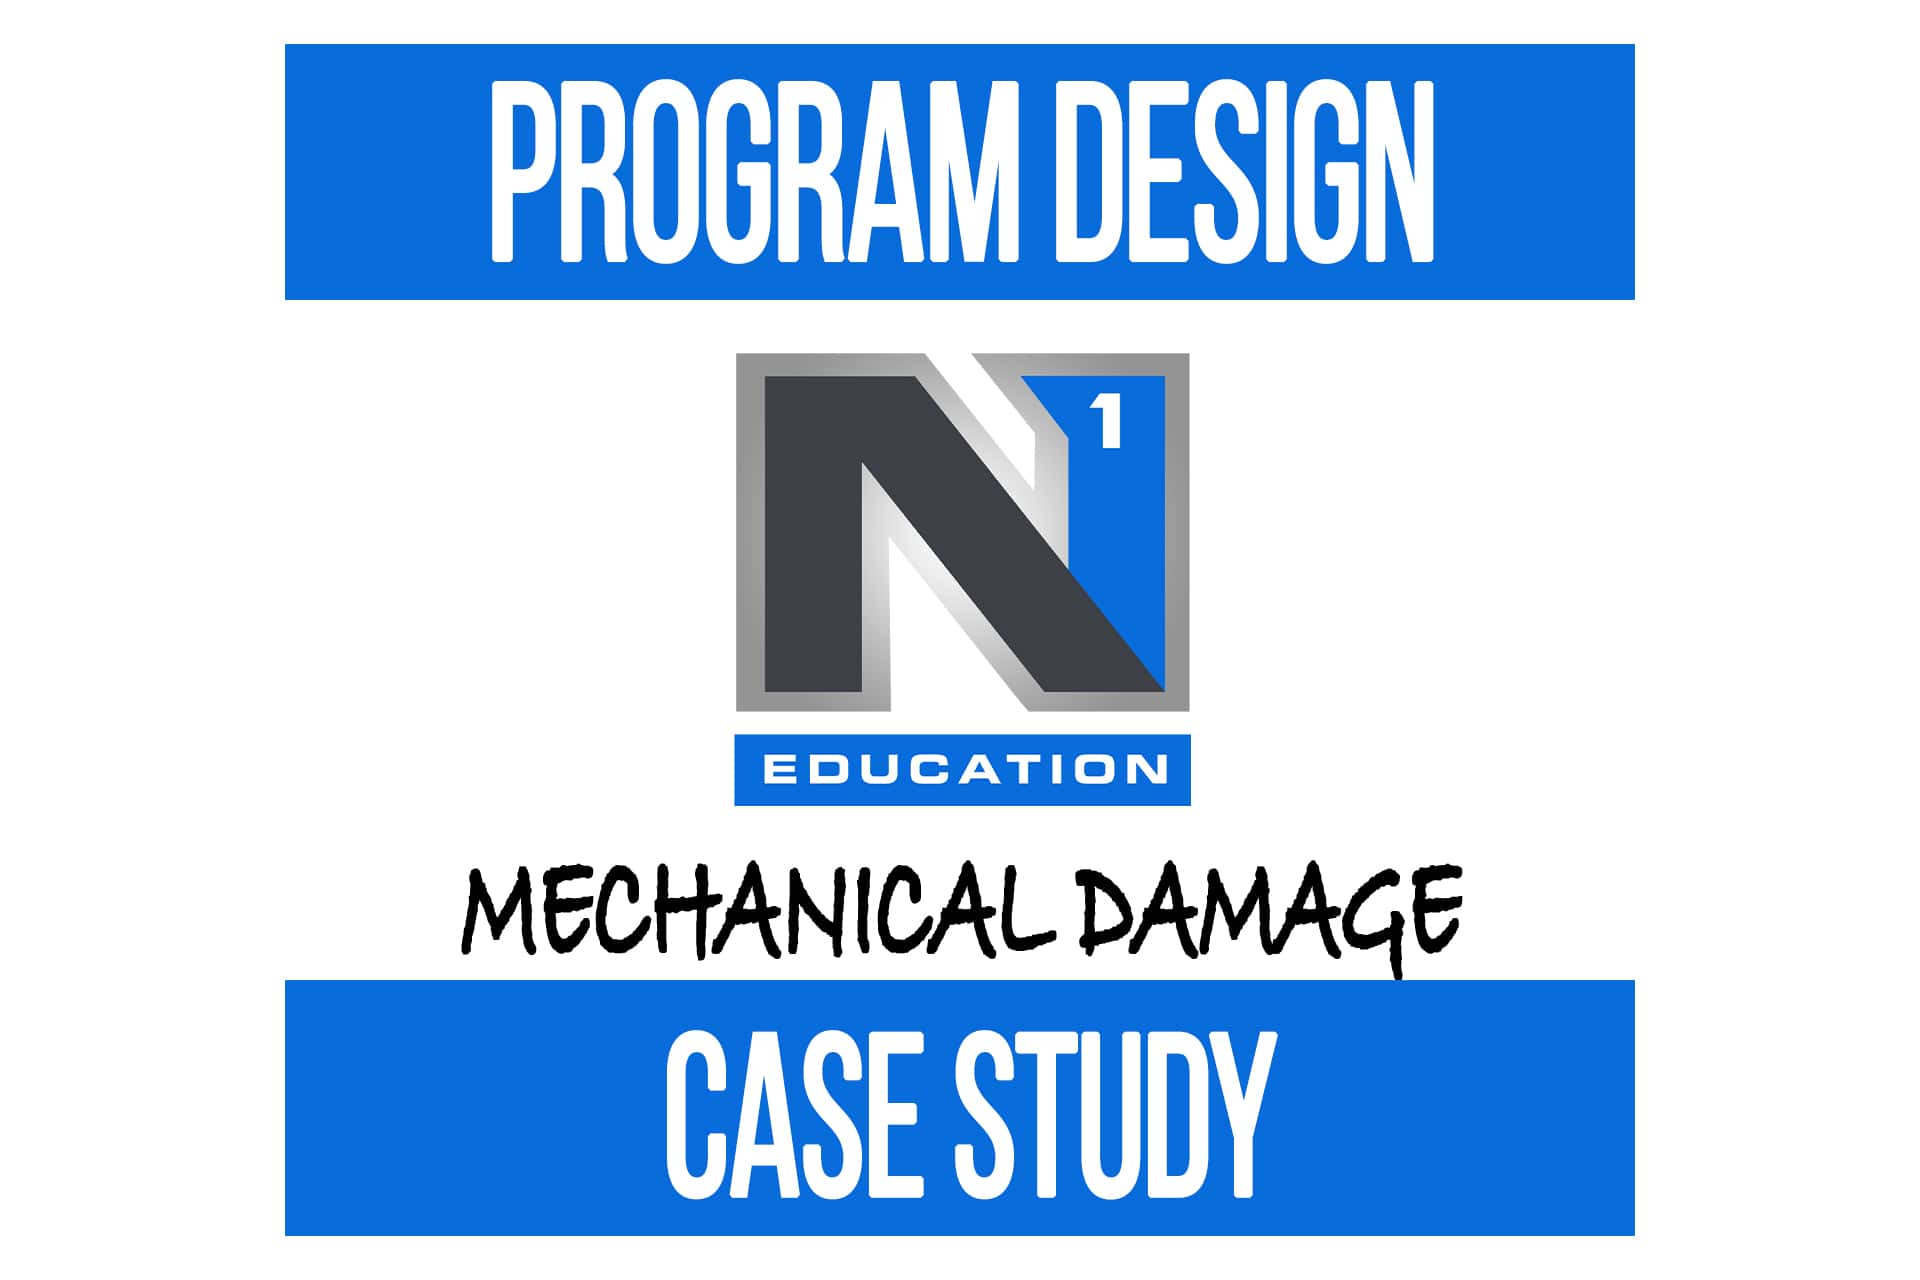 Program Design Case Study: Mechanical Damage